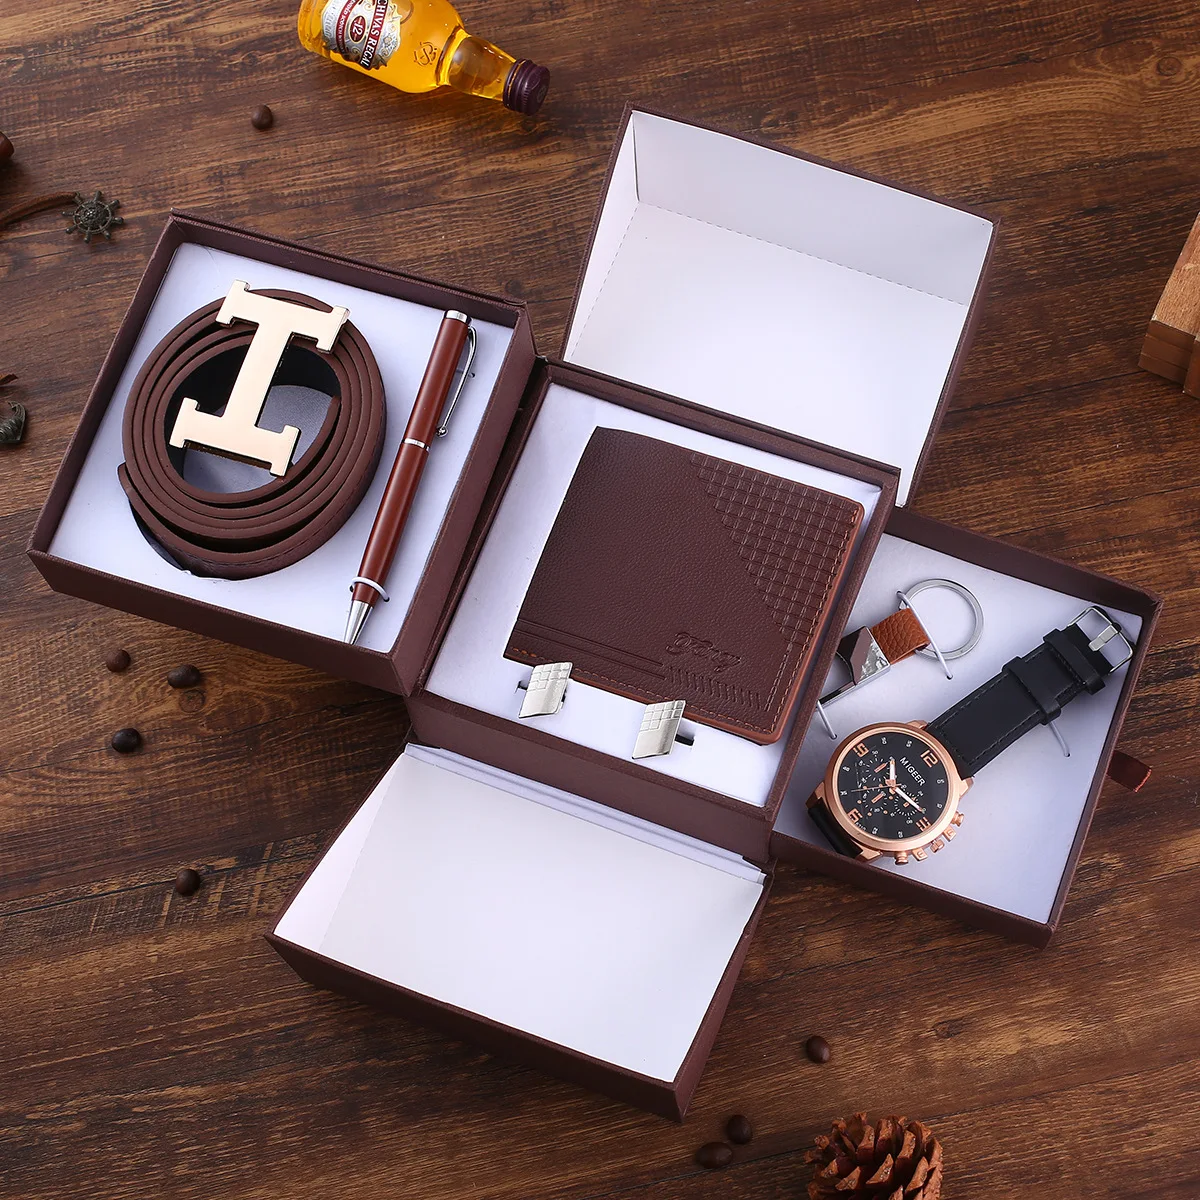 

Luxury Top brand Men's Watch Set High Quality Leather Belt Sunglasses Perfume Jewelry Watch Gift Set for Boyfriend Husband Dad